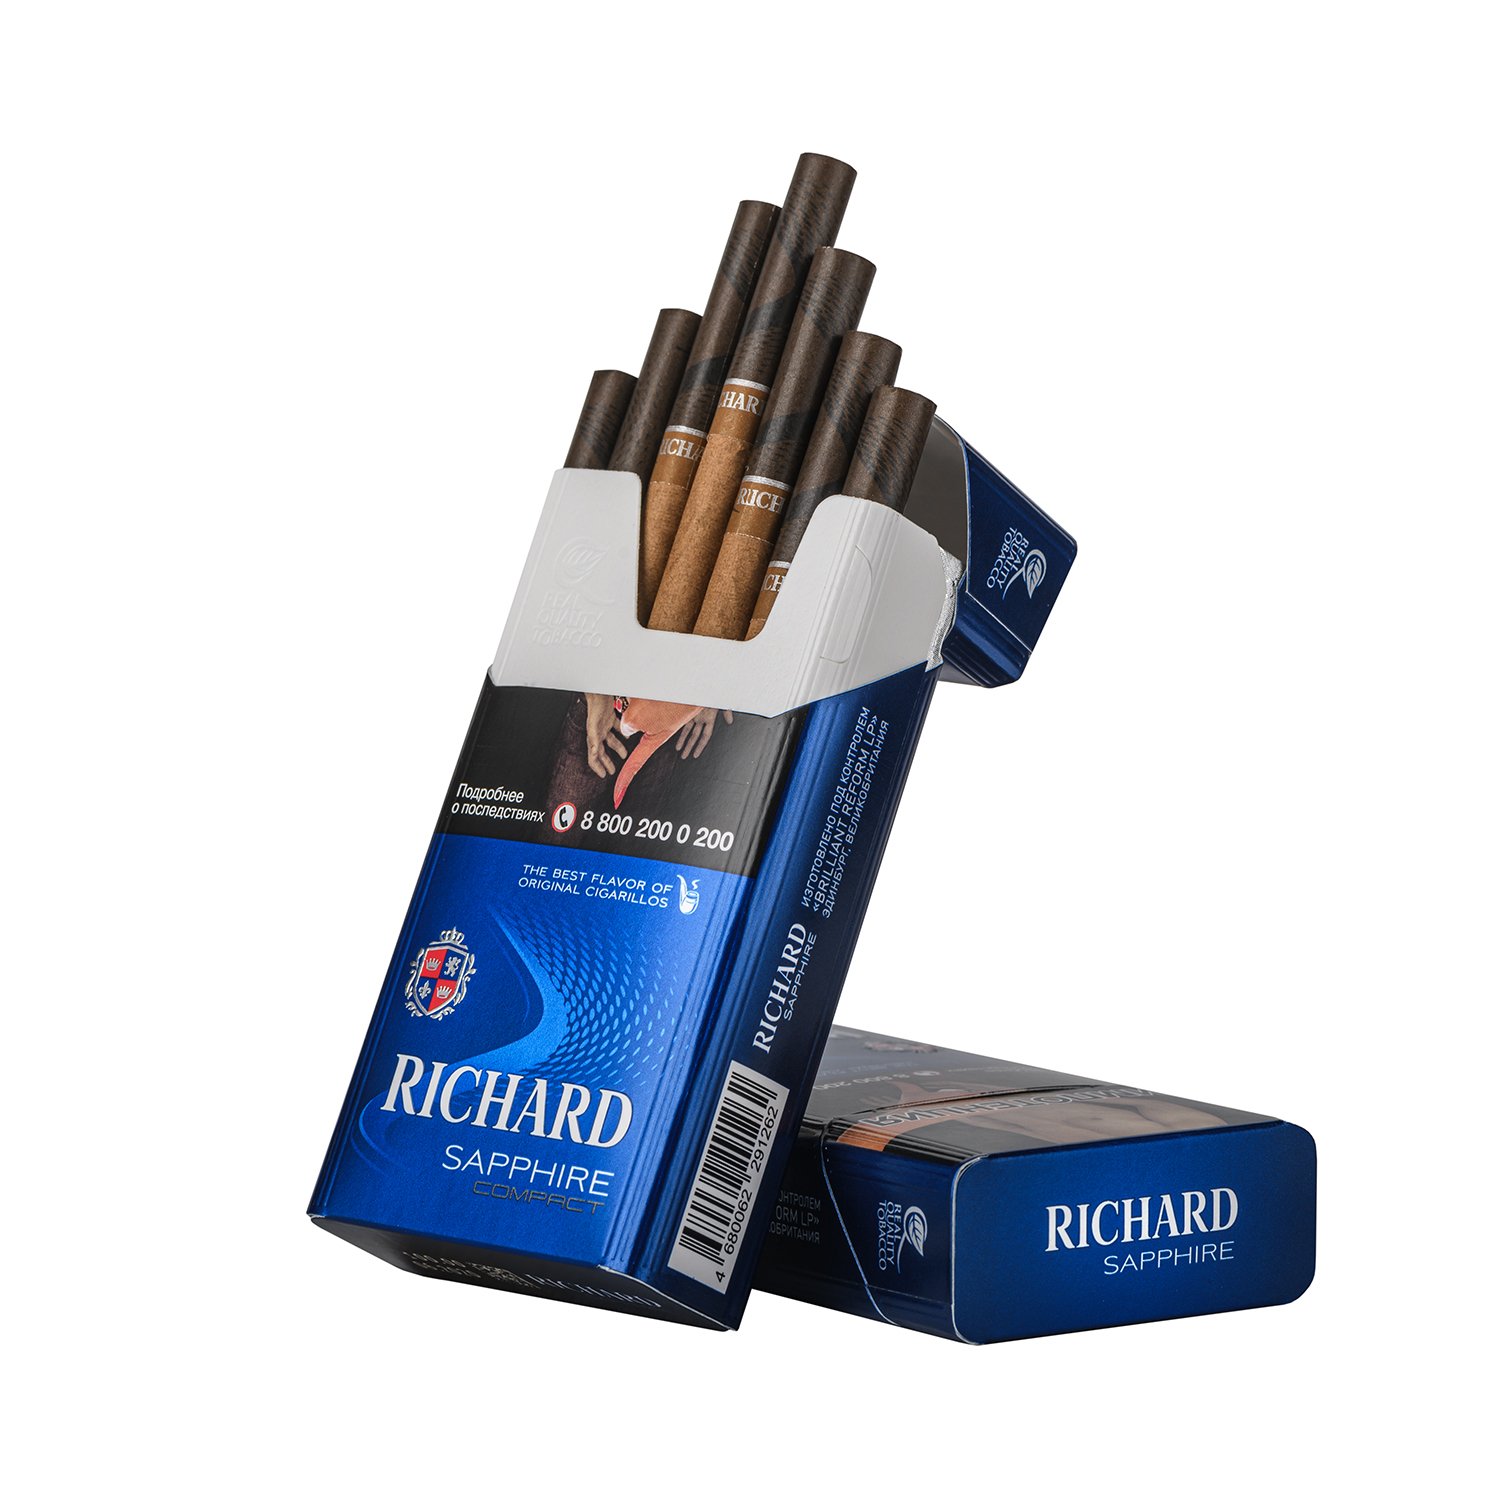 Блэк компакт. Сигареты Richard Sapphire Compact. Сигареты Richard Black Compact.